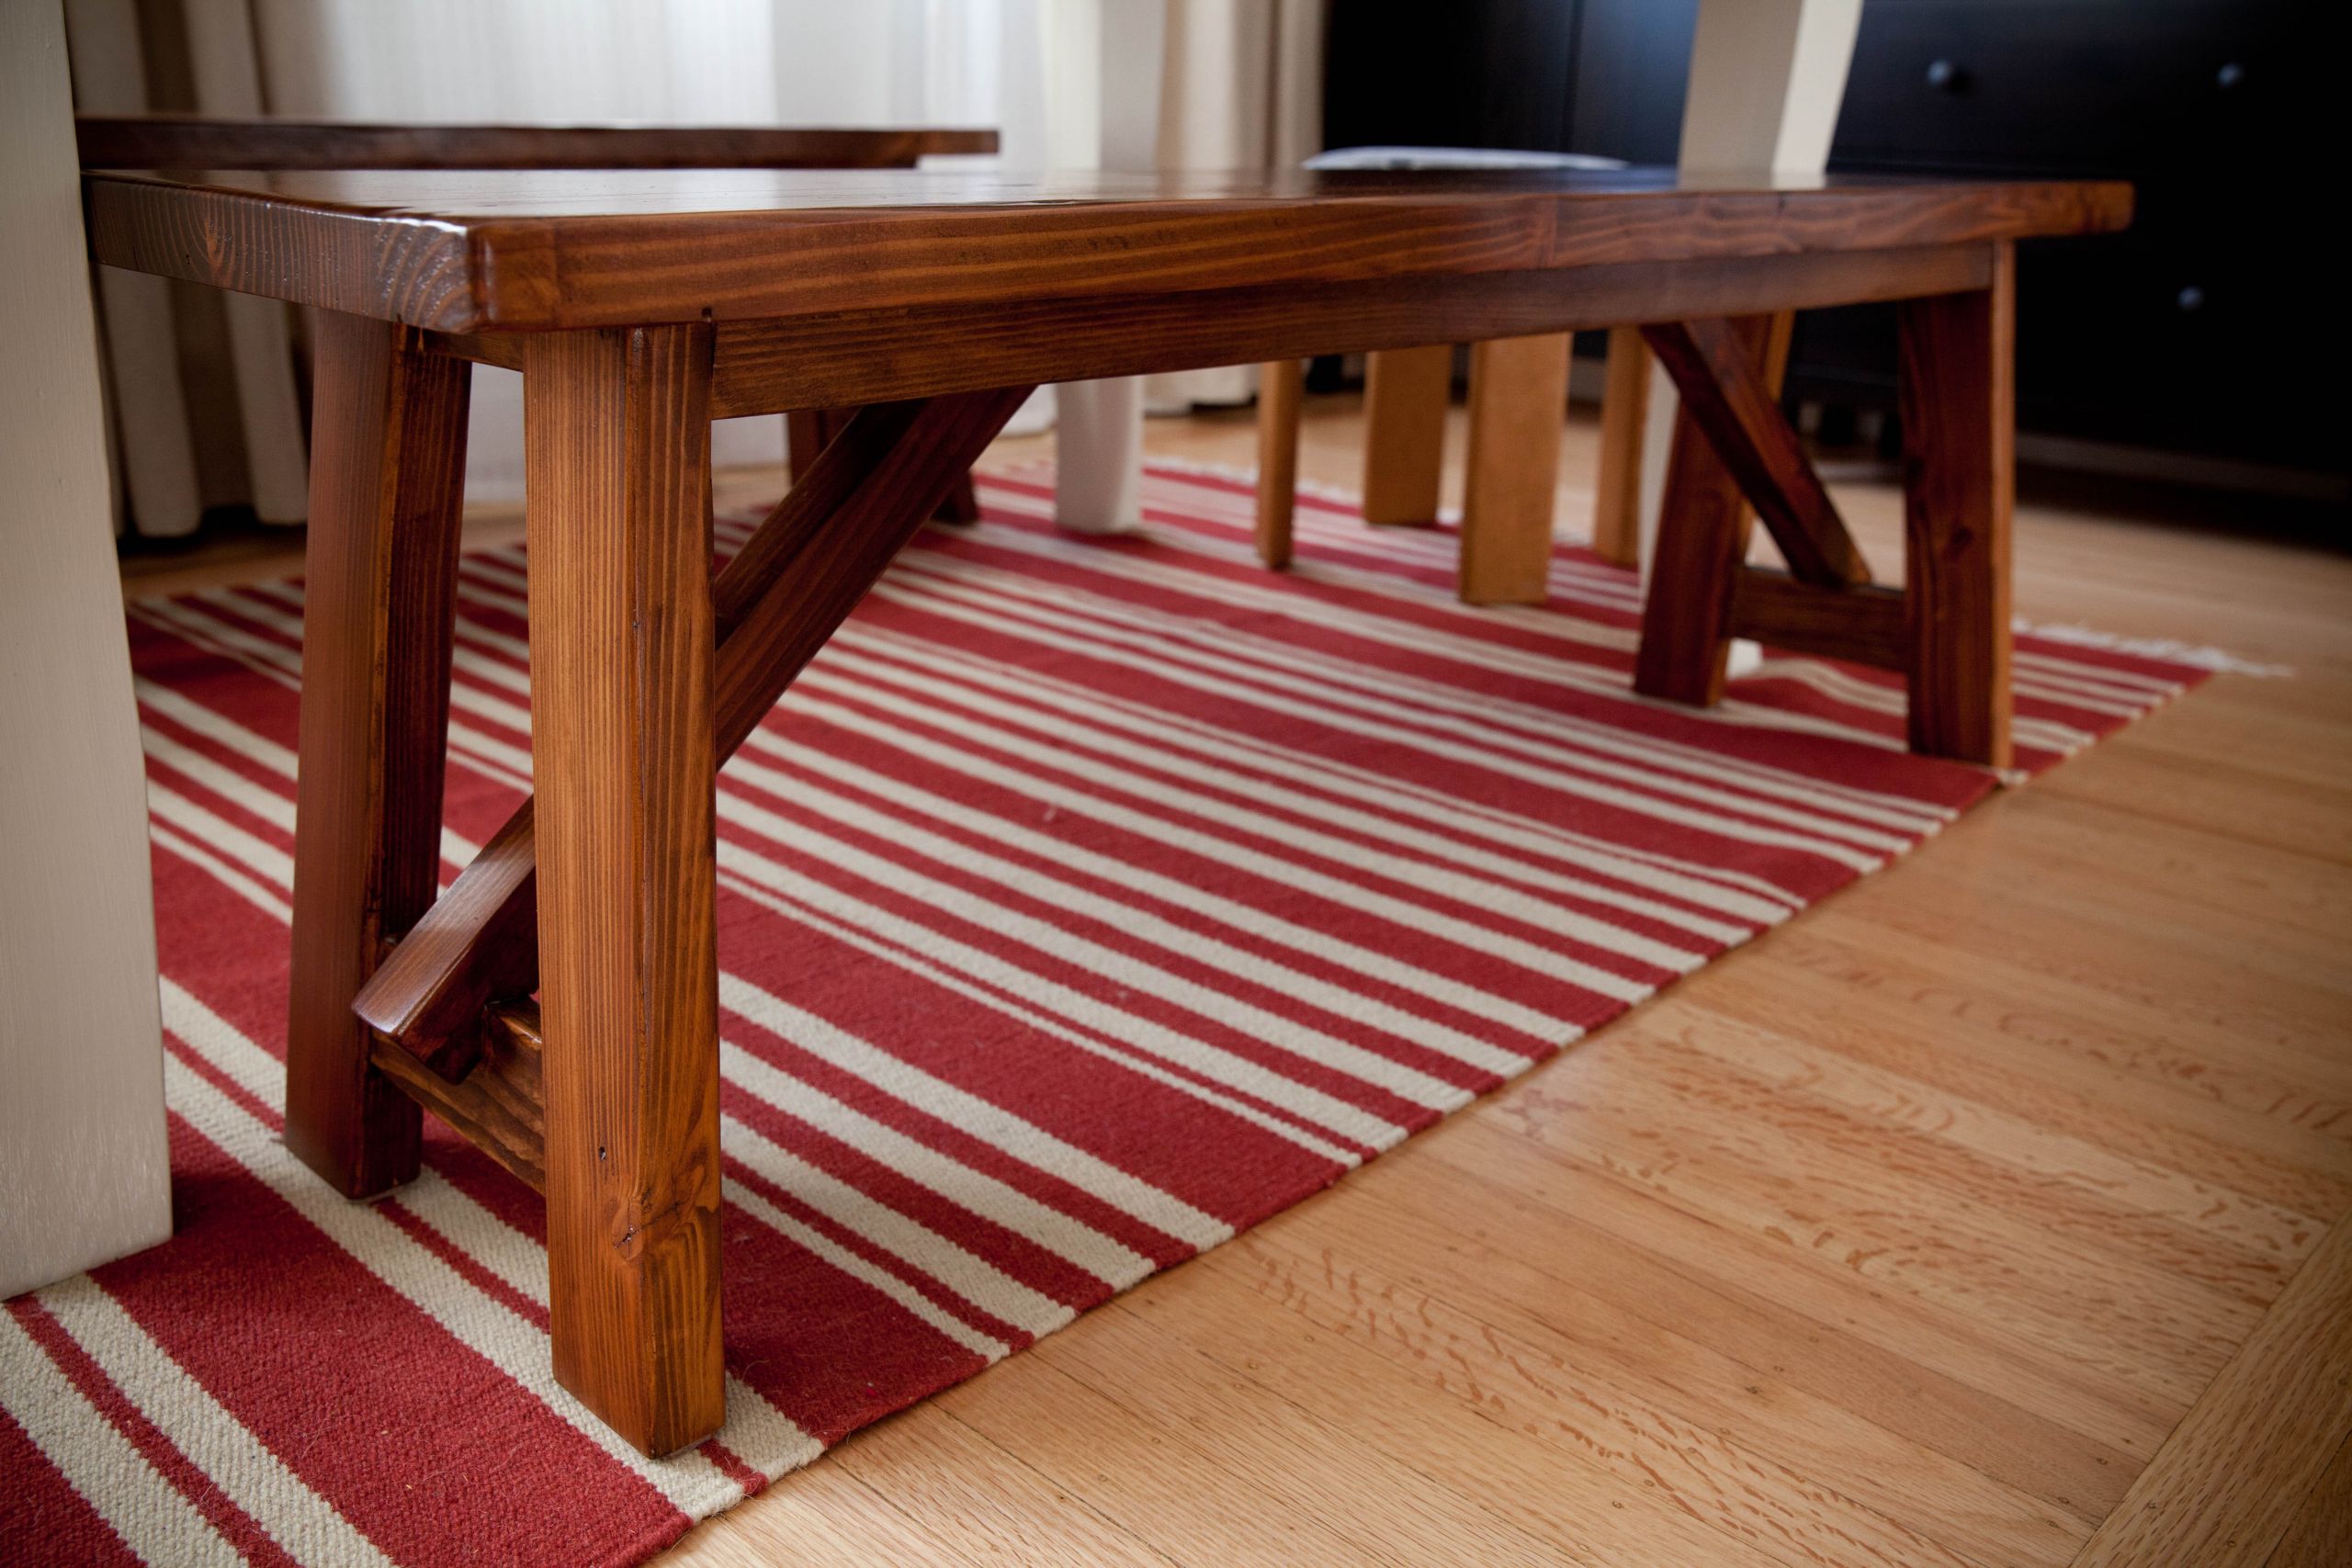 DIY Reclaimed Wood Dining Table
 DIY reclaimed barnwood dining table